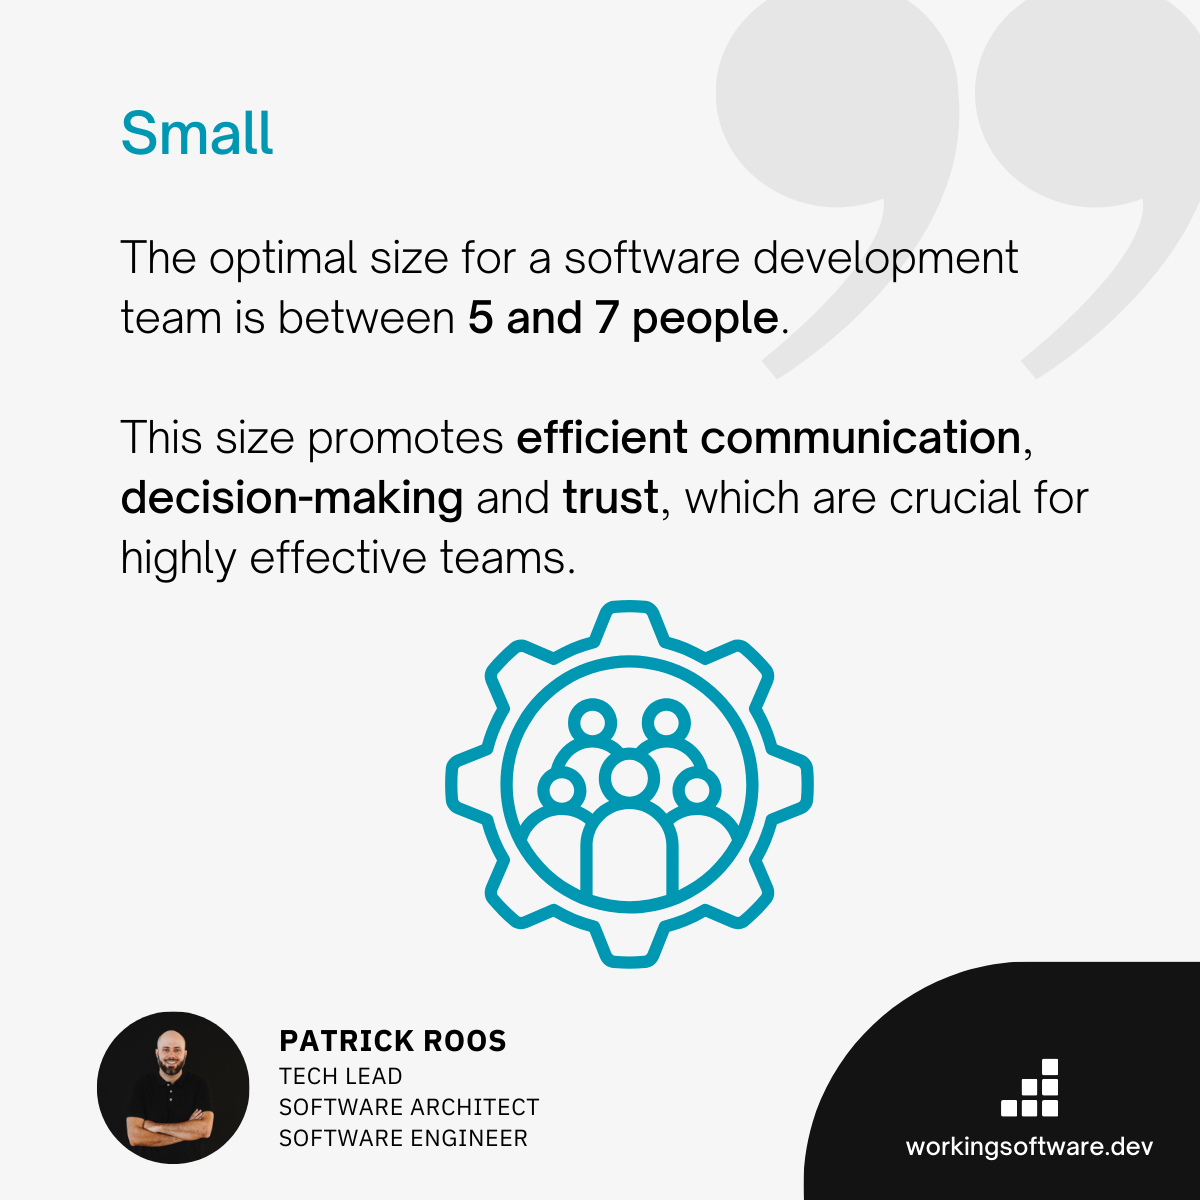 9 Essential Elements of High-Effective Software Development Teams